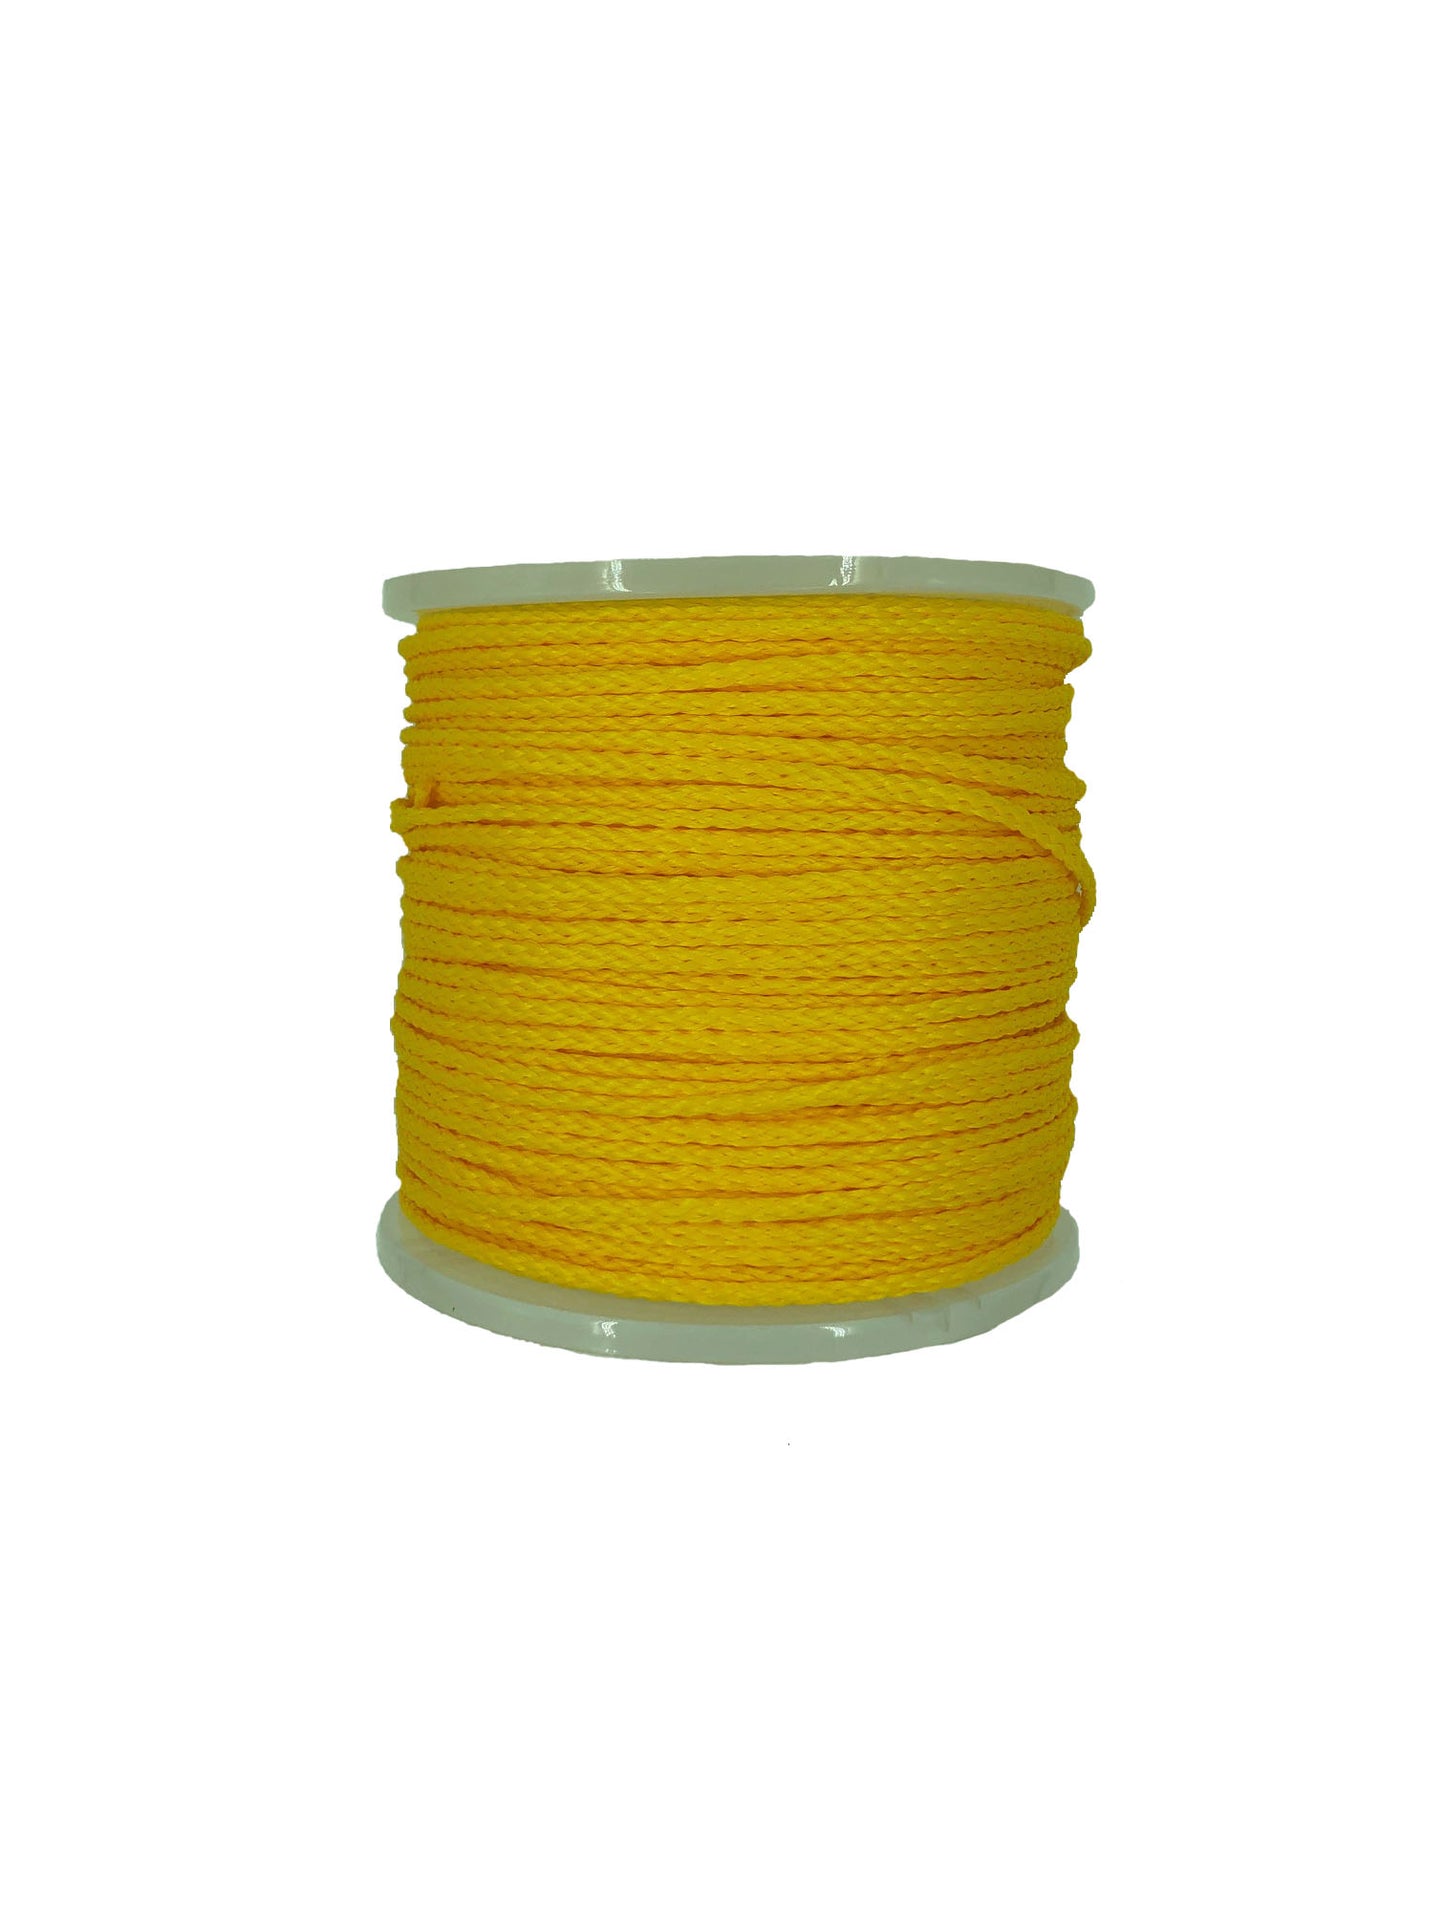 1/4" X 1000' Yellow Hollow Braid Polypropylene Rope